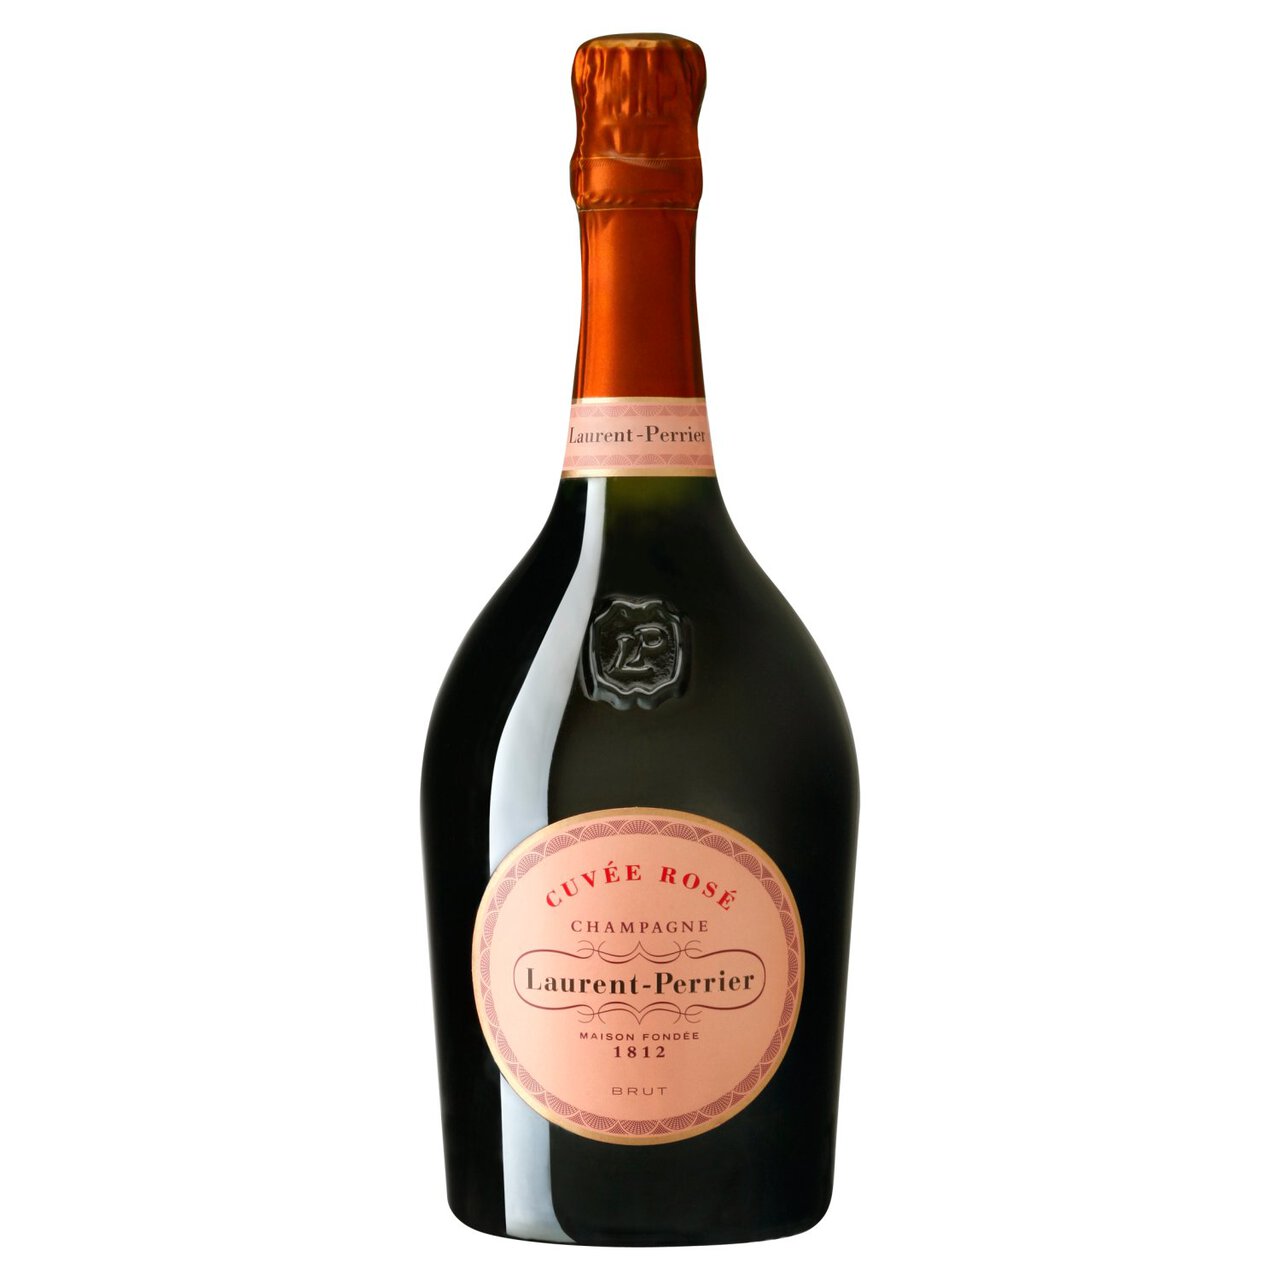 Laurent-Perrier Cuvee Rose Champagne NV 75cl